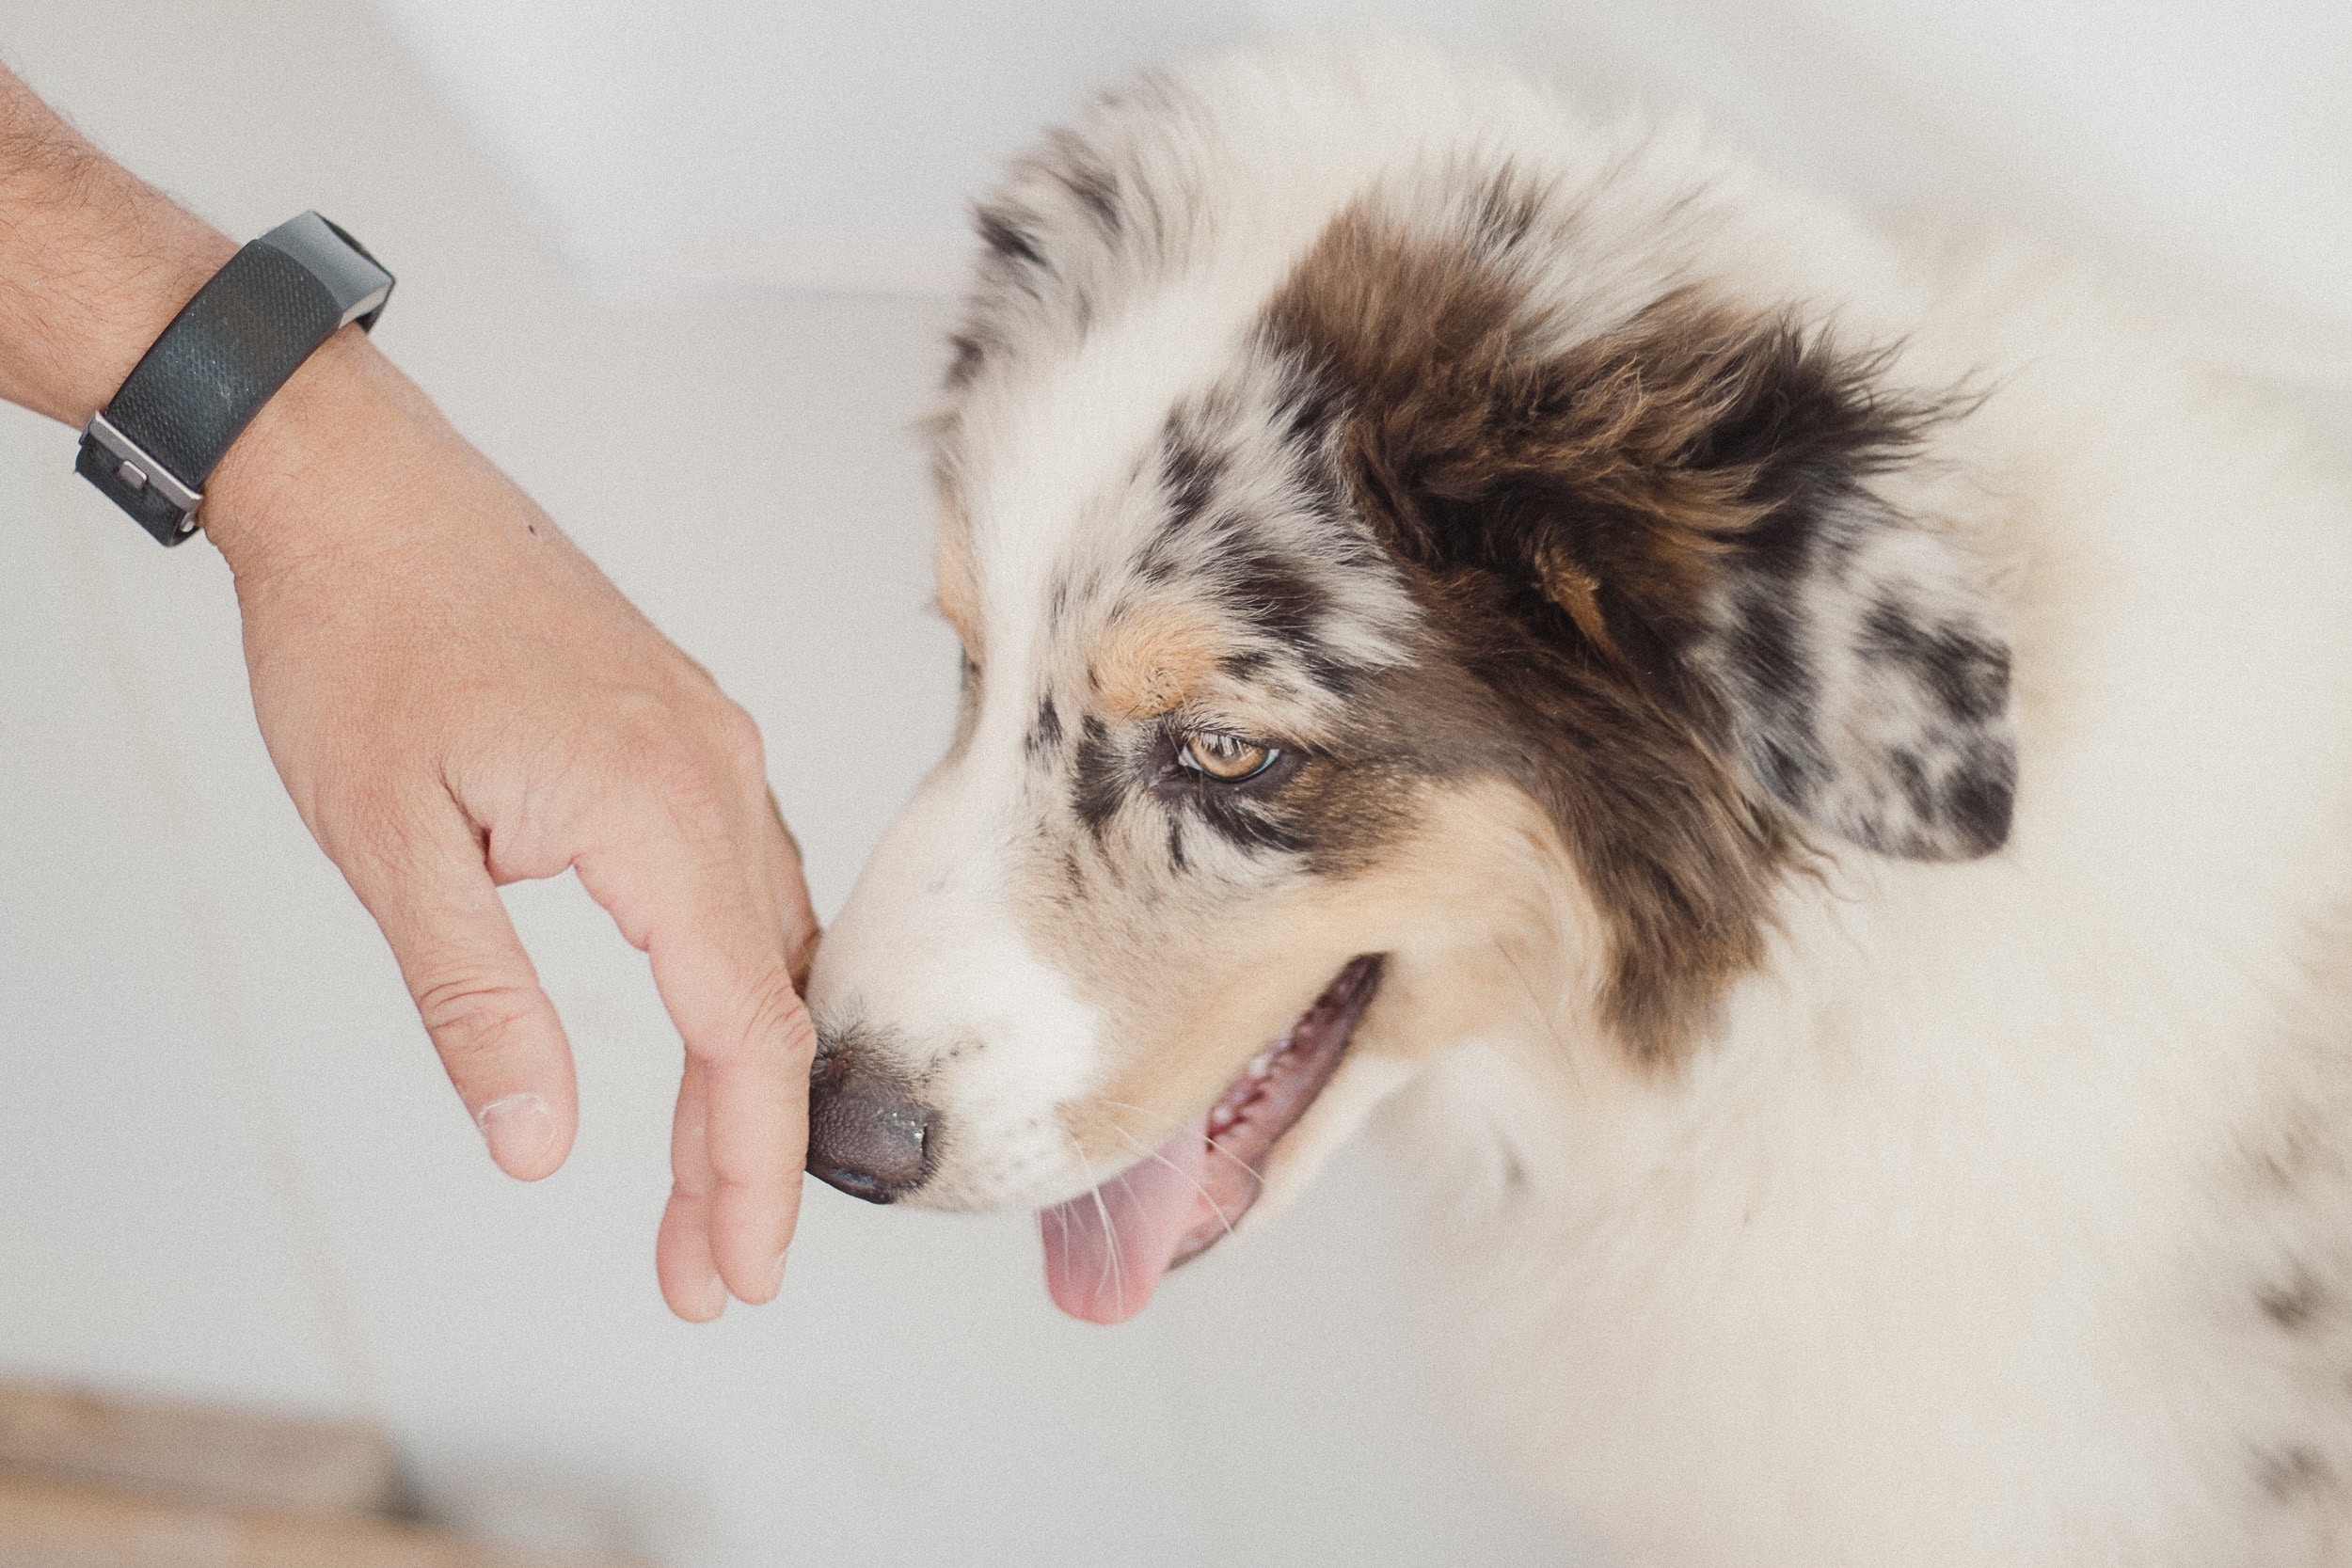 Animal Care Services aims to stop unnecessary euthanasia | kiiitv.com